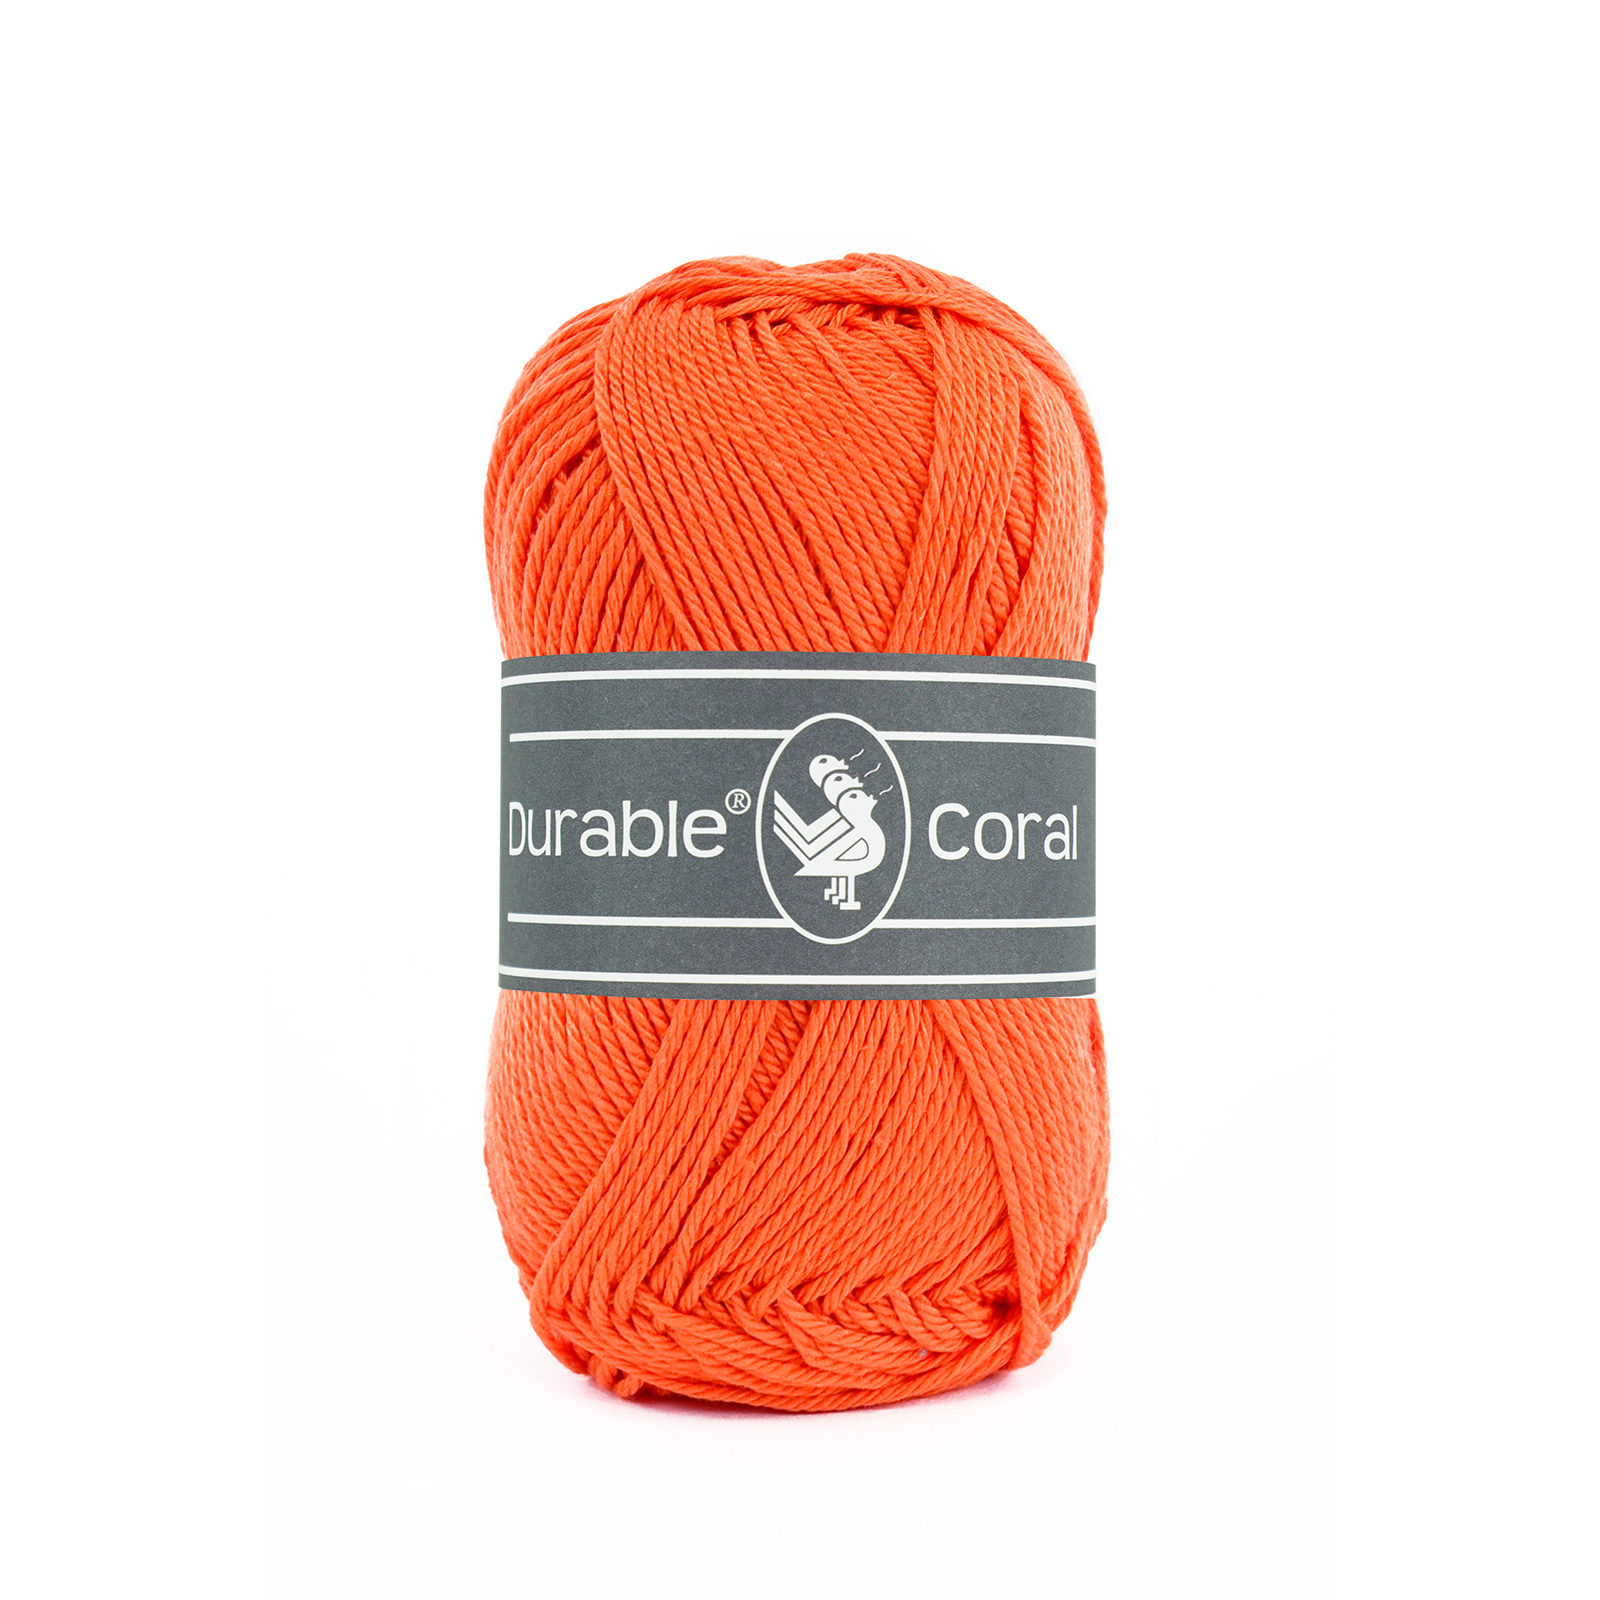 Durable Coral Oranje-2194